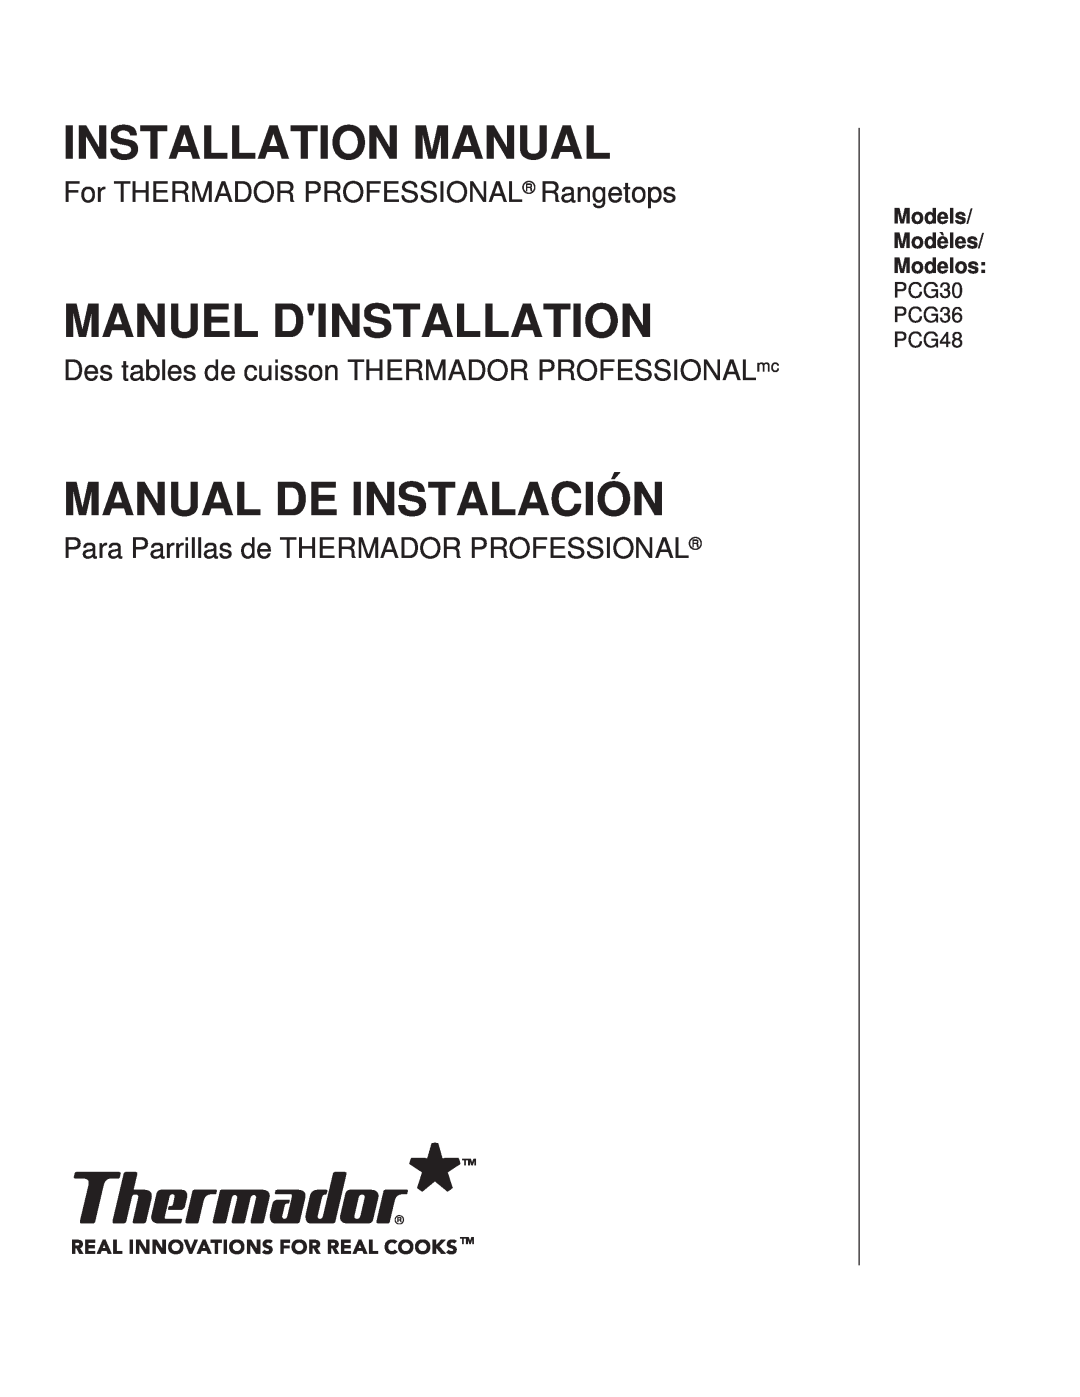 Thermador installation manual Installation Manual, Manuel Dinstallation, Manual De Instalación, PCG30 PCG36 PCG48 